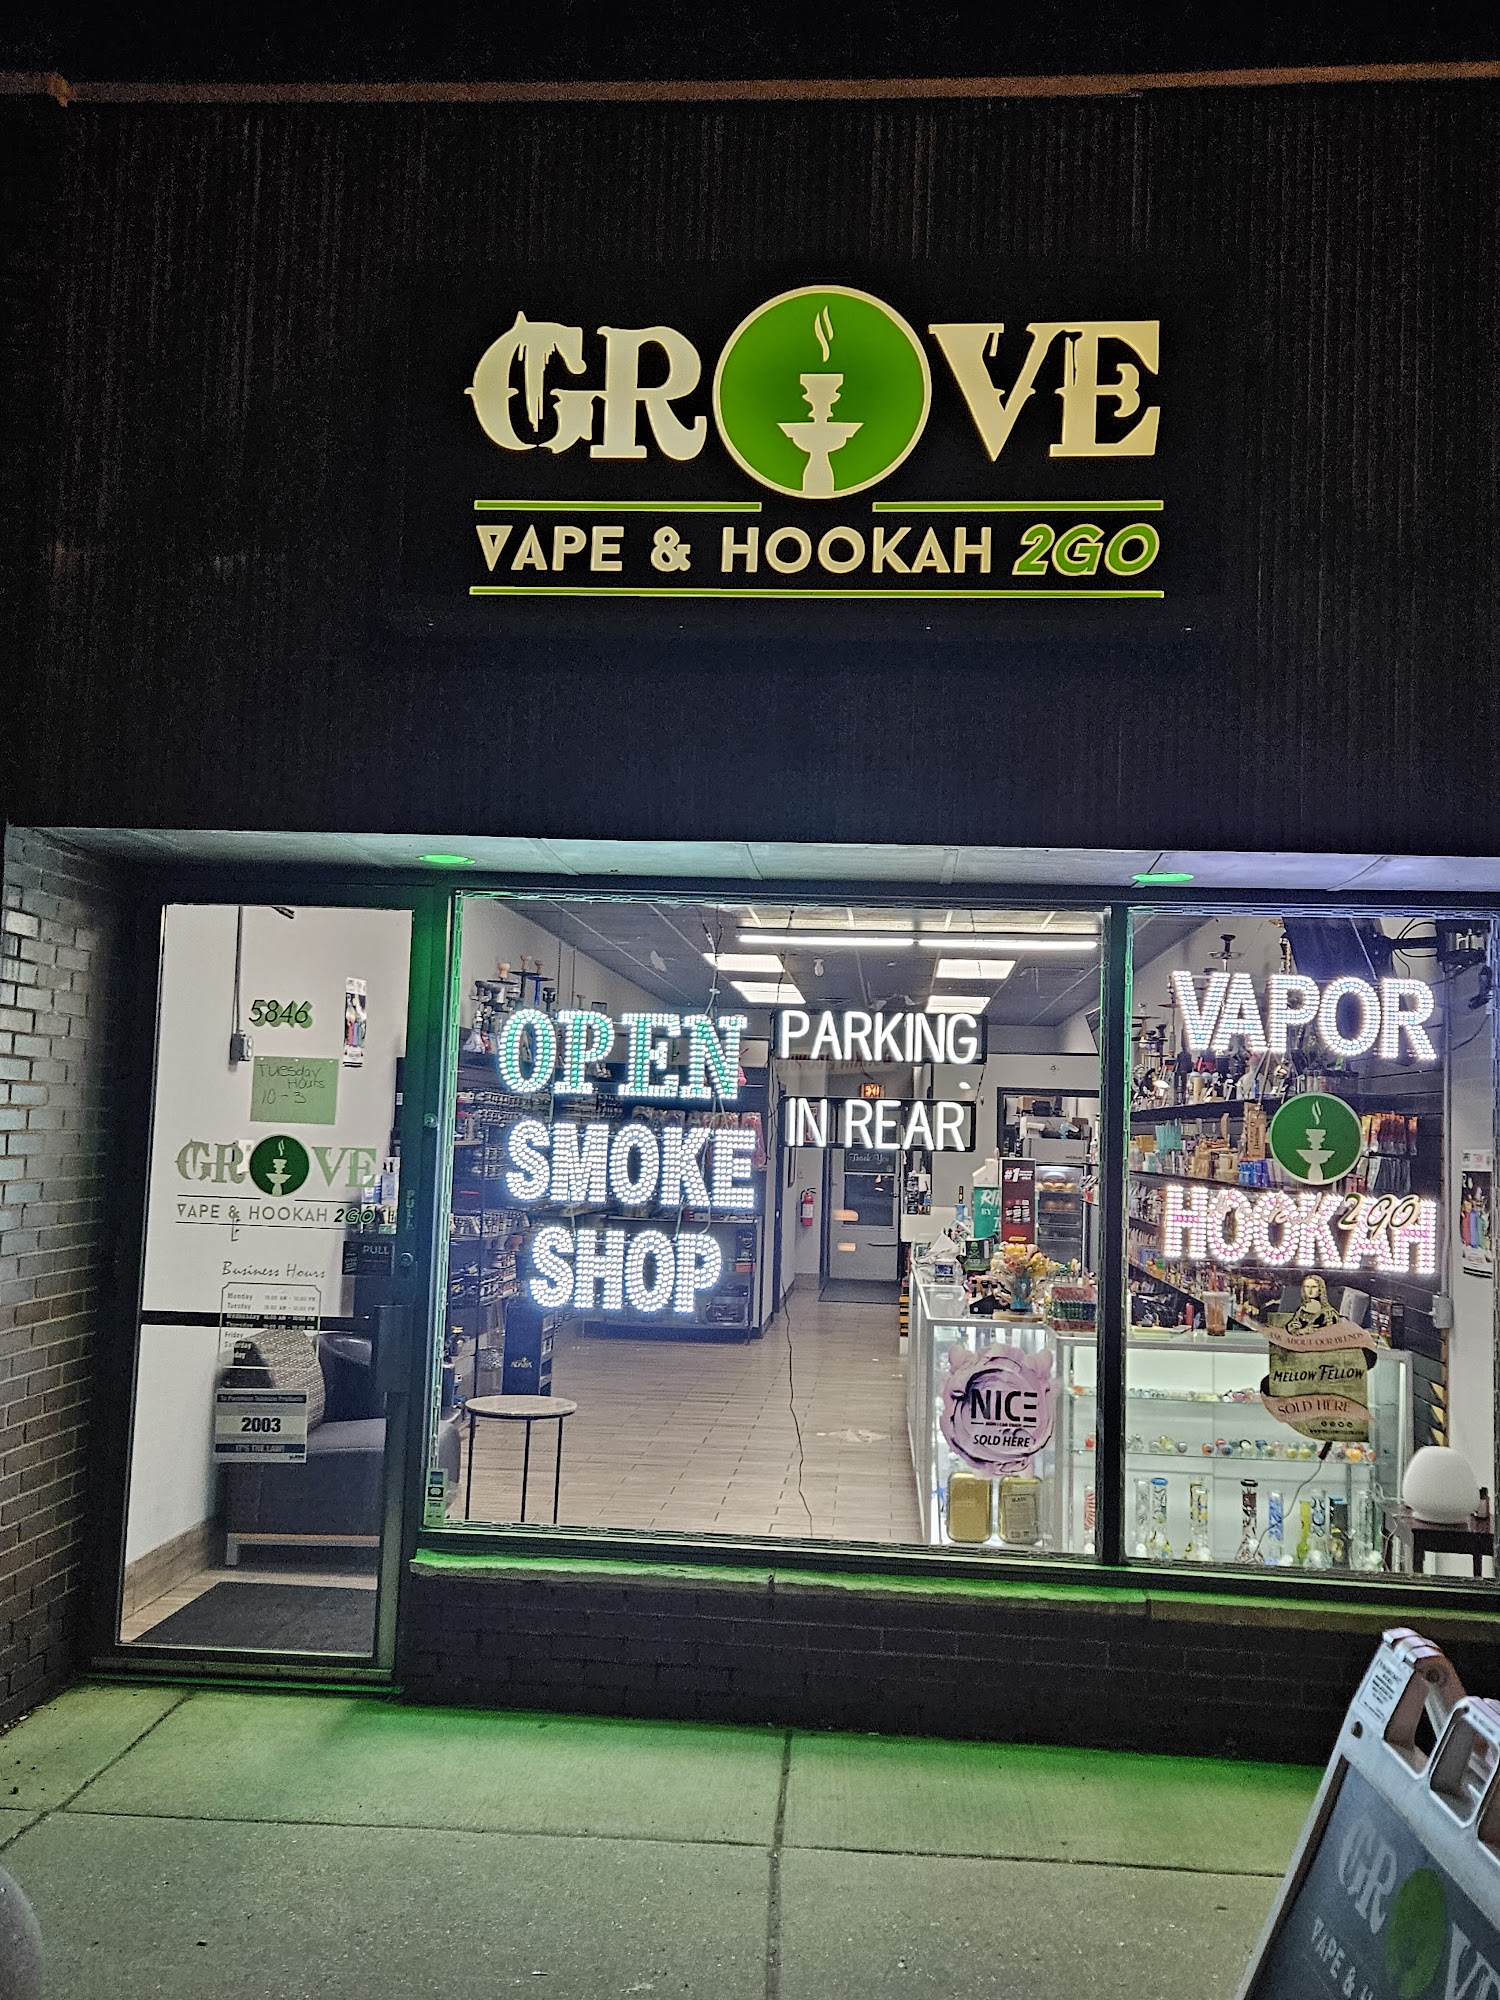 Grove Vape & Hookah2go(smoke shop)(Hookah to Go, Fruit heads, Hookah tobacco, CBD Shop,Smoke shop, Vapes)